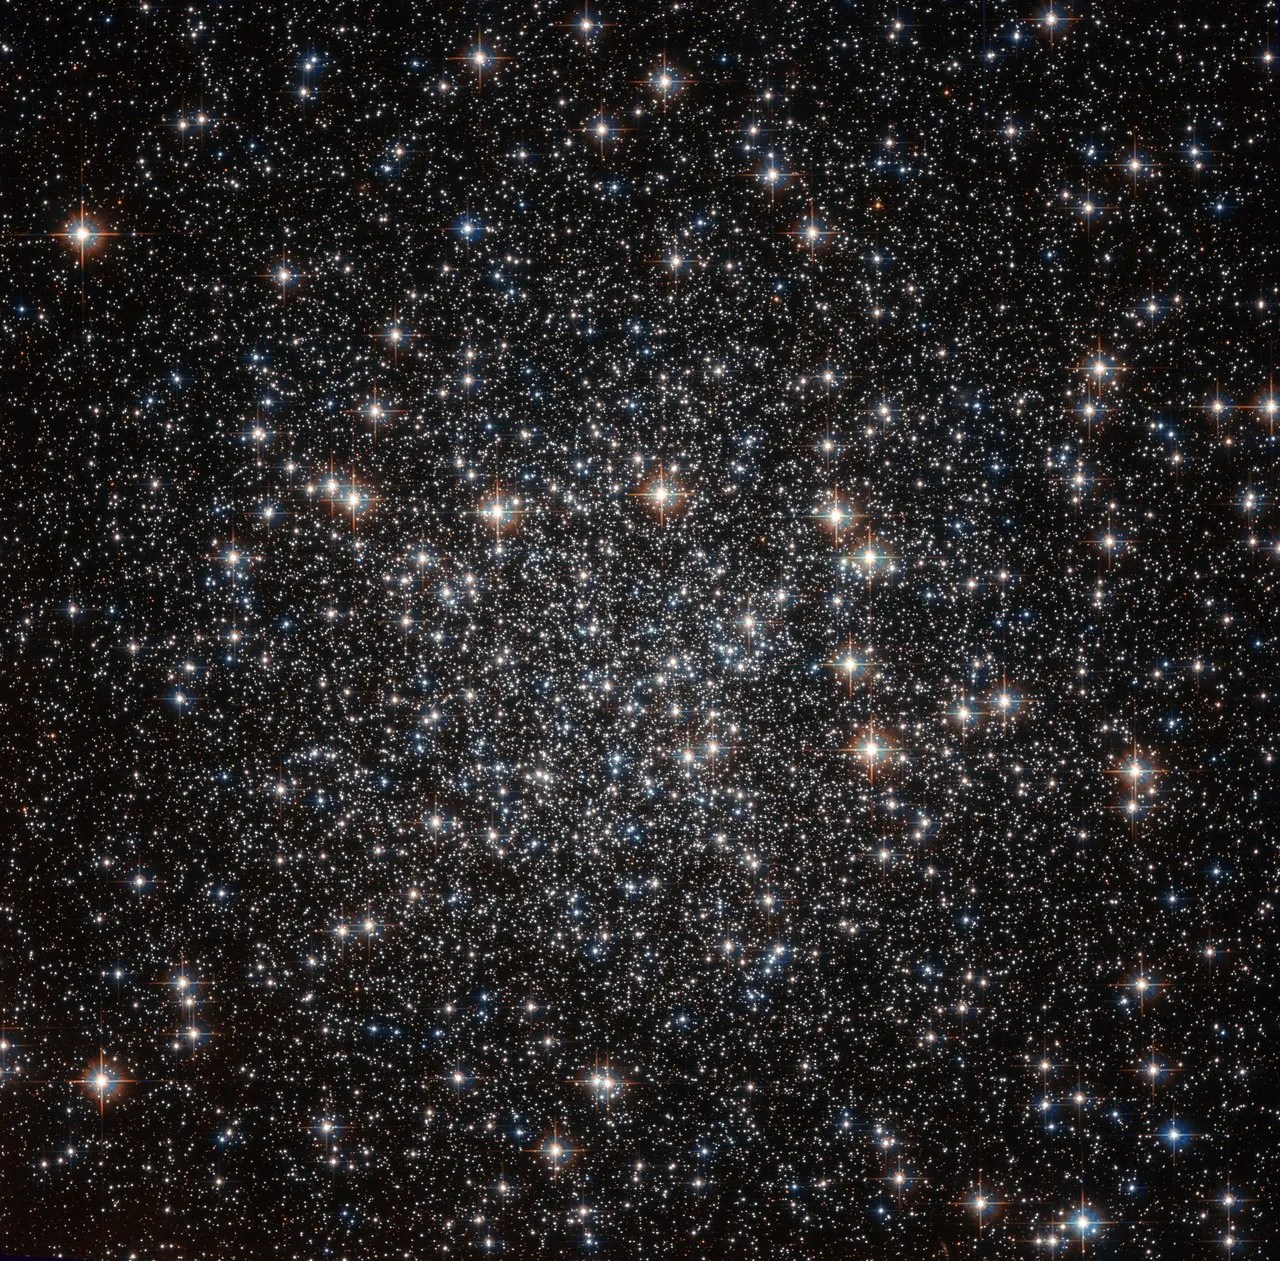 A field of stars called a globular cluster